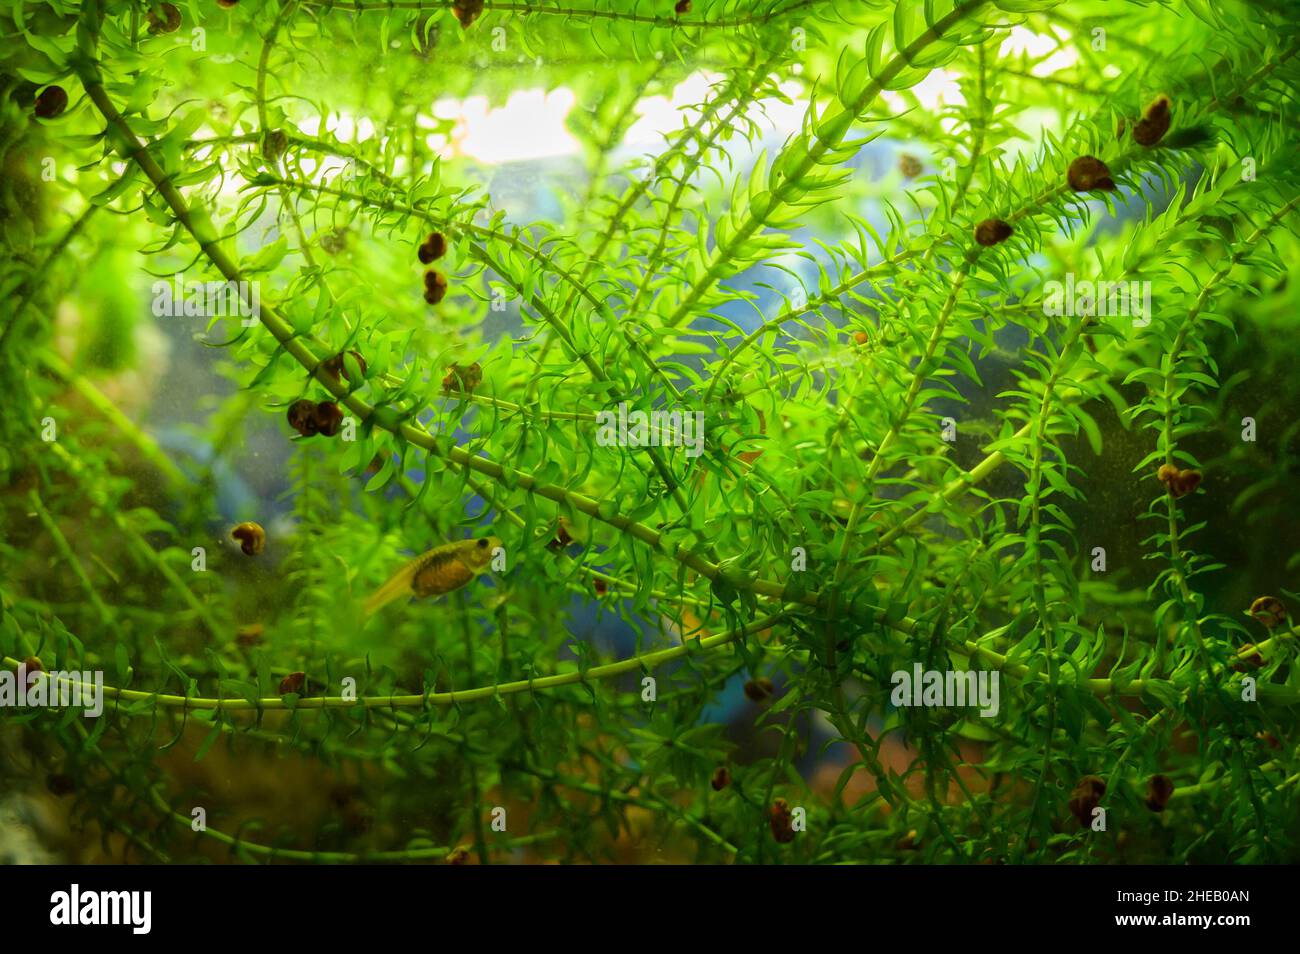 Aquatic plant - elodea in aquarium. Selective focus. Stock Photo